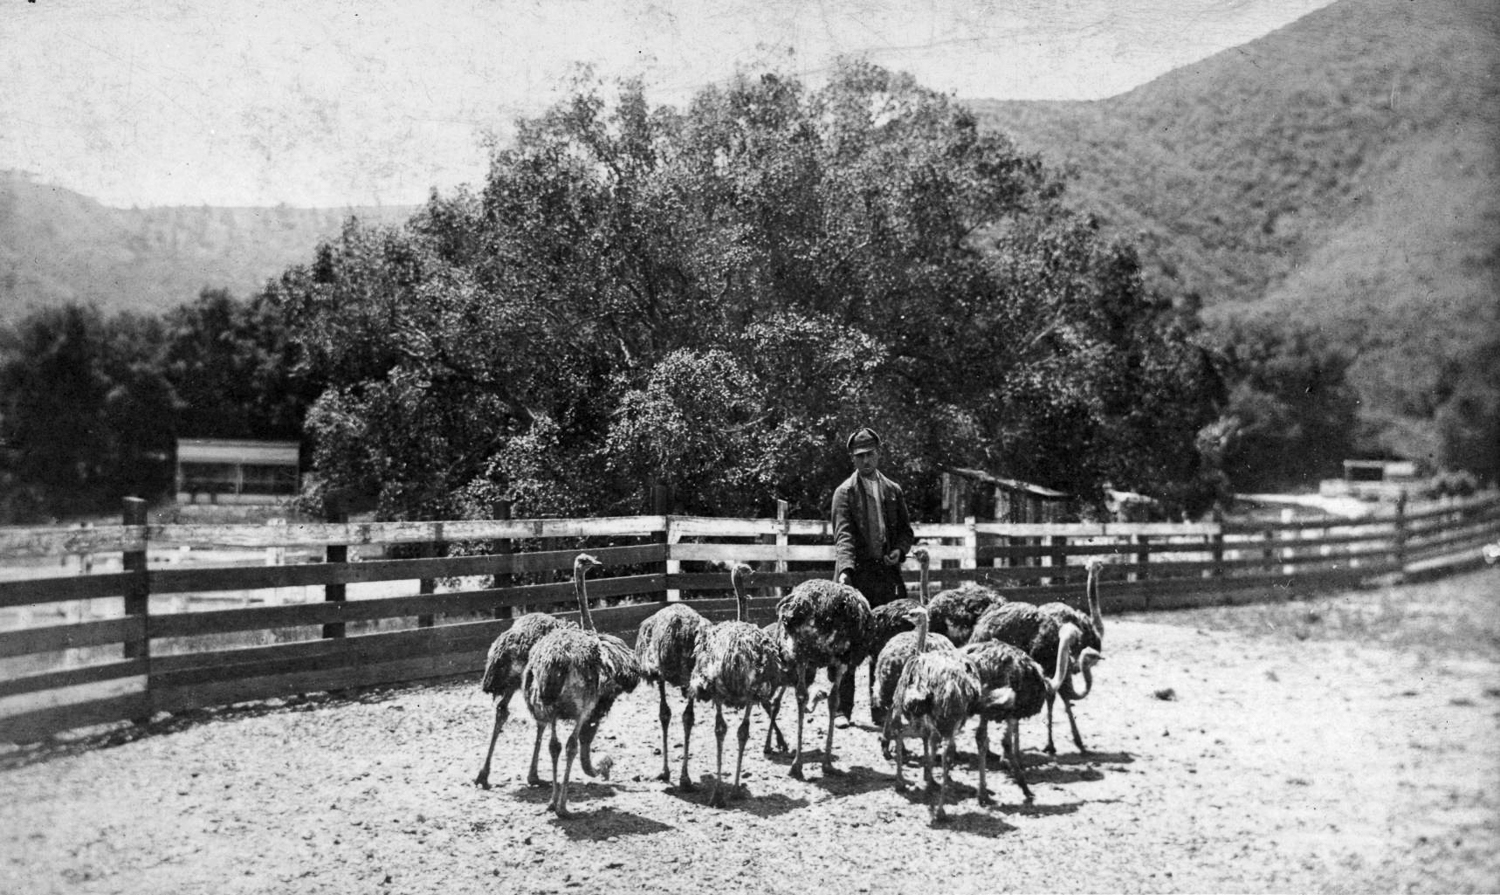 A man herding ostriches at Rancho Los Feliz.